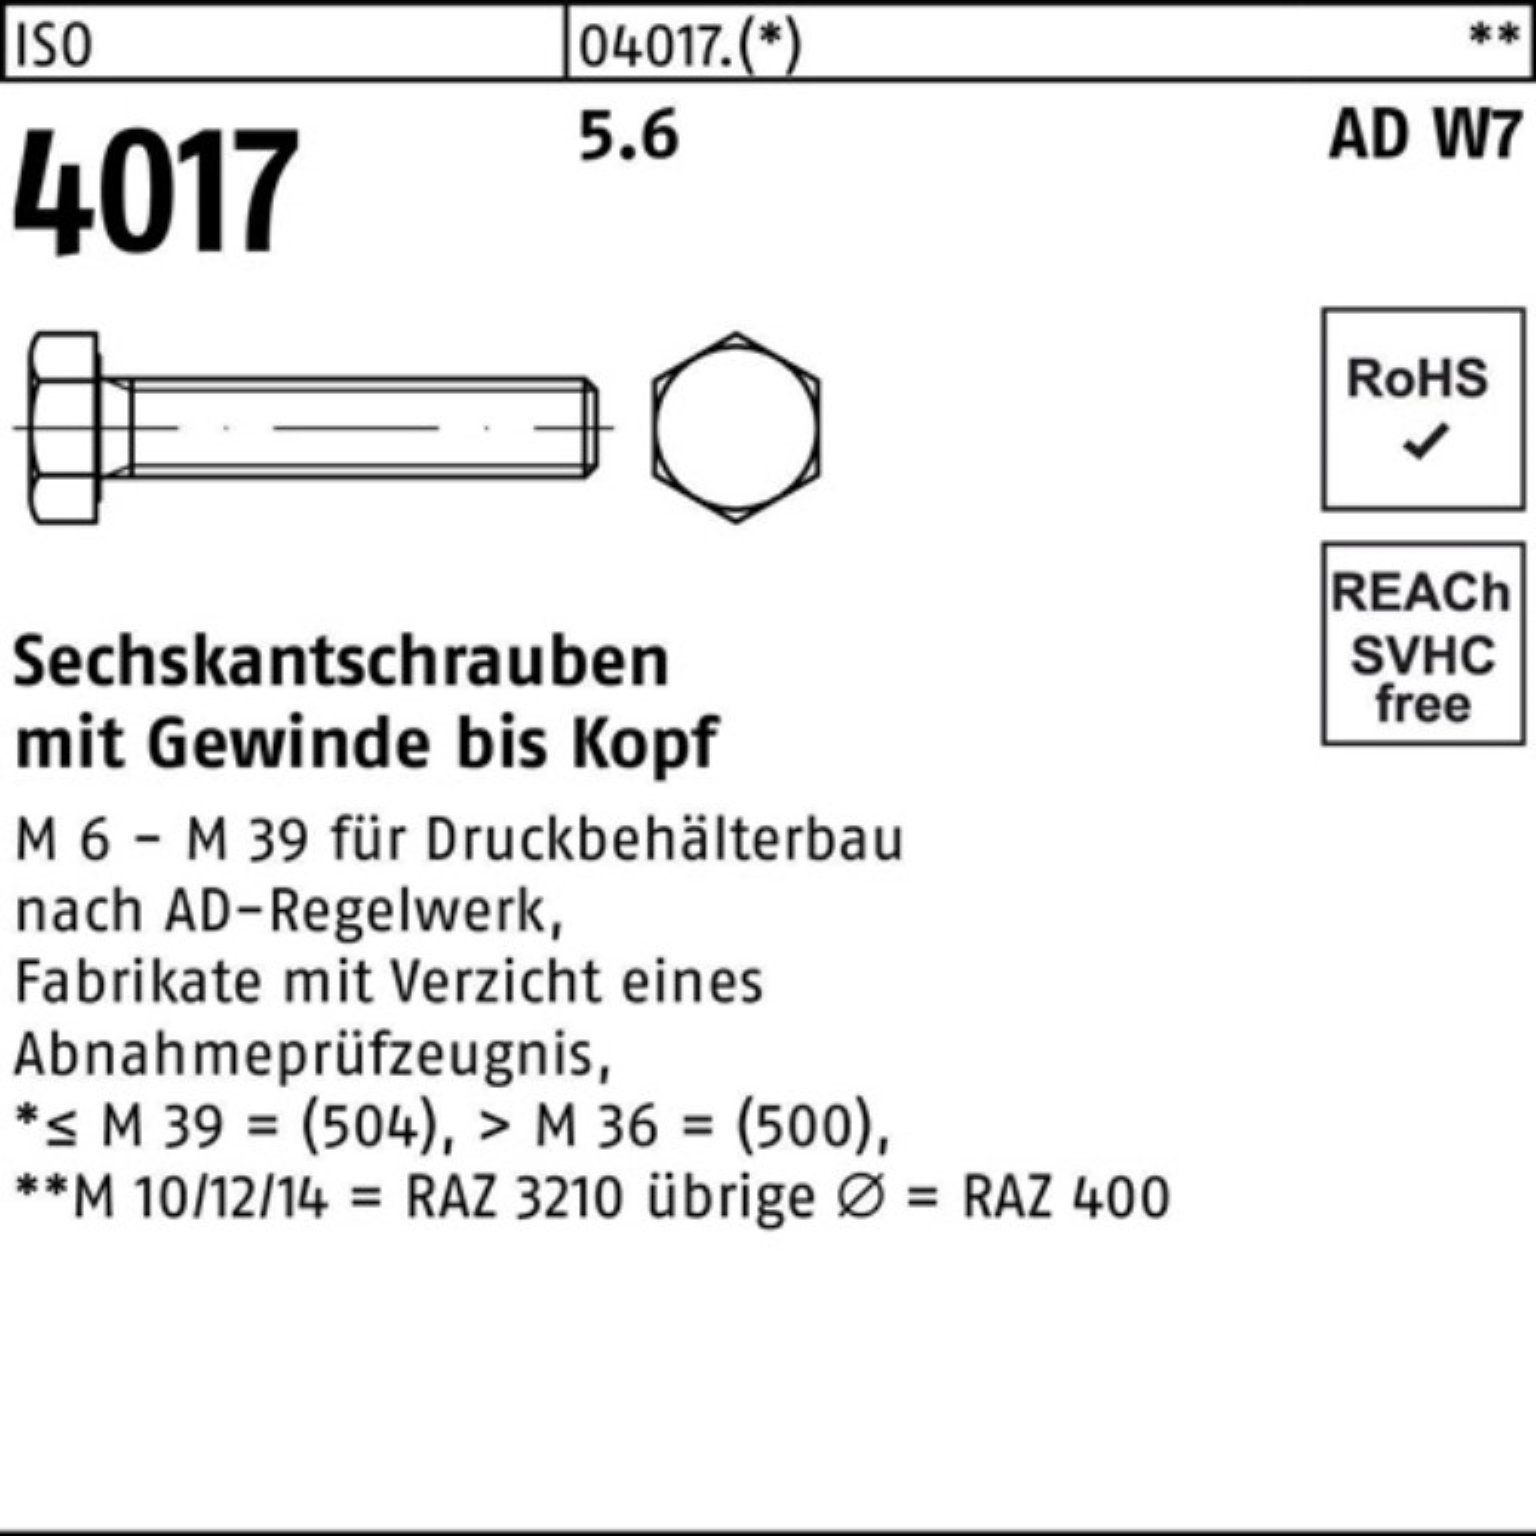 Bufab Sechskantschraube 1 I 4017 Sechskantschraube W7 5.6 Pack AD Stück 100er 120 ISO VG M30x